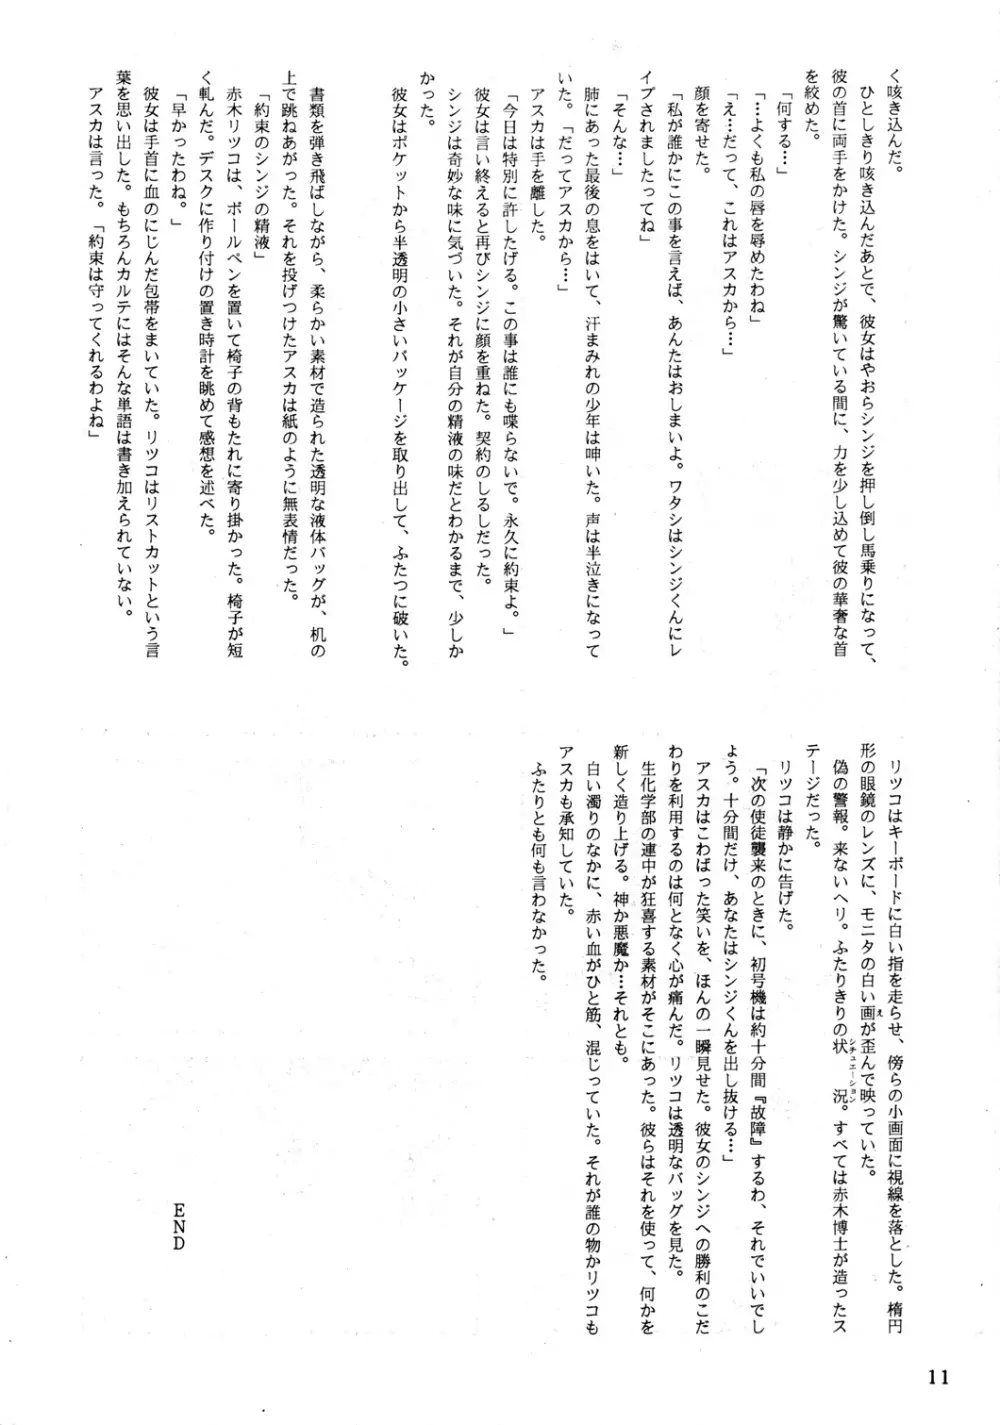 EVA PLUS B WEST JAPAN 仕様 - page10